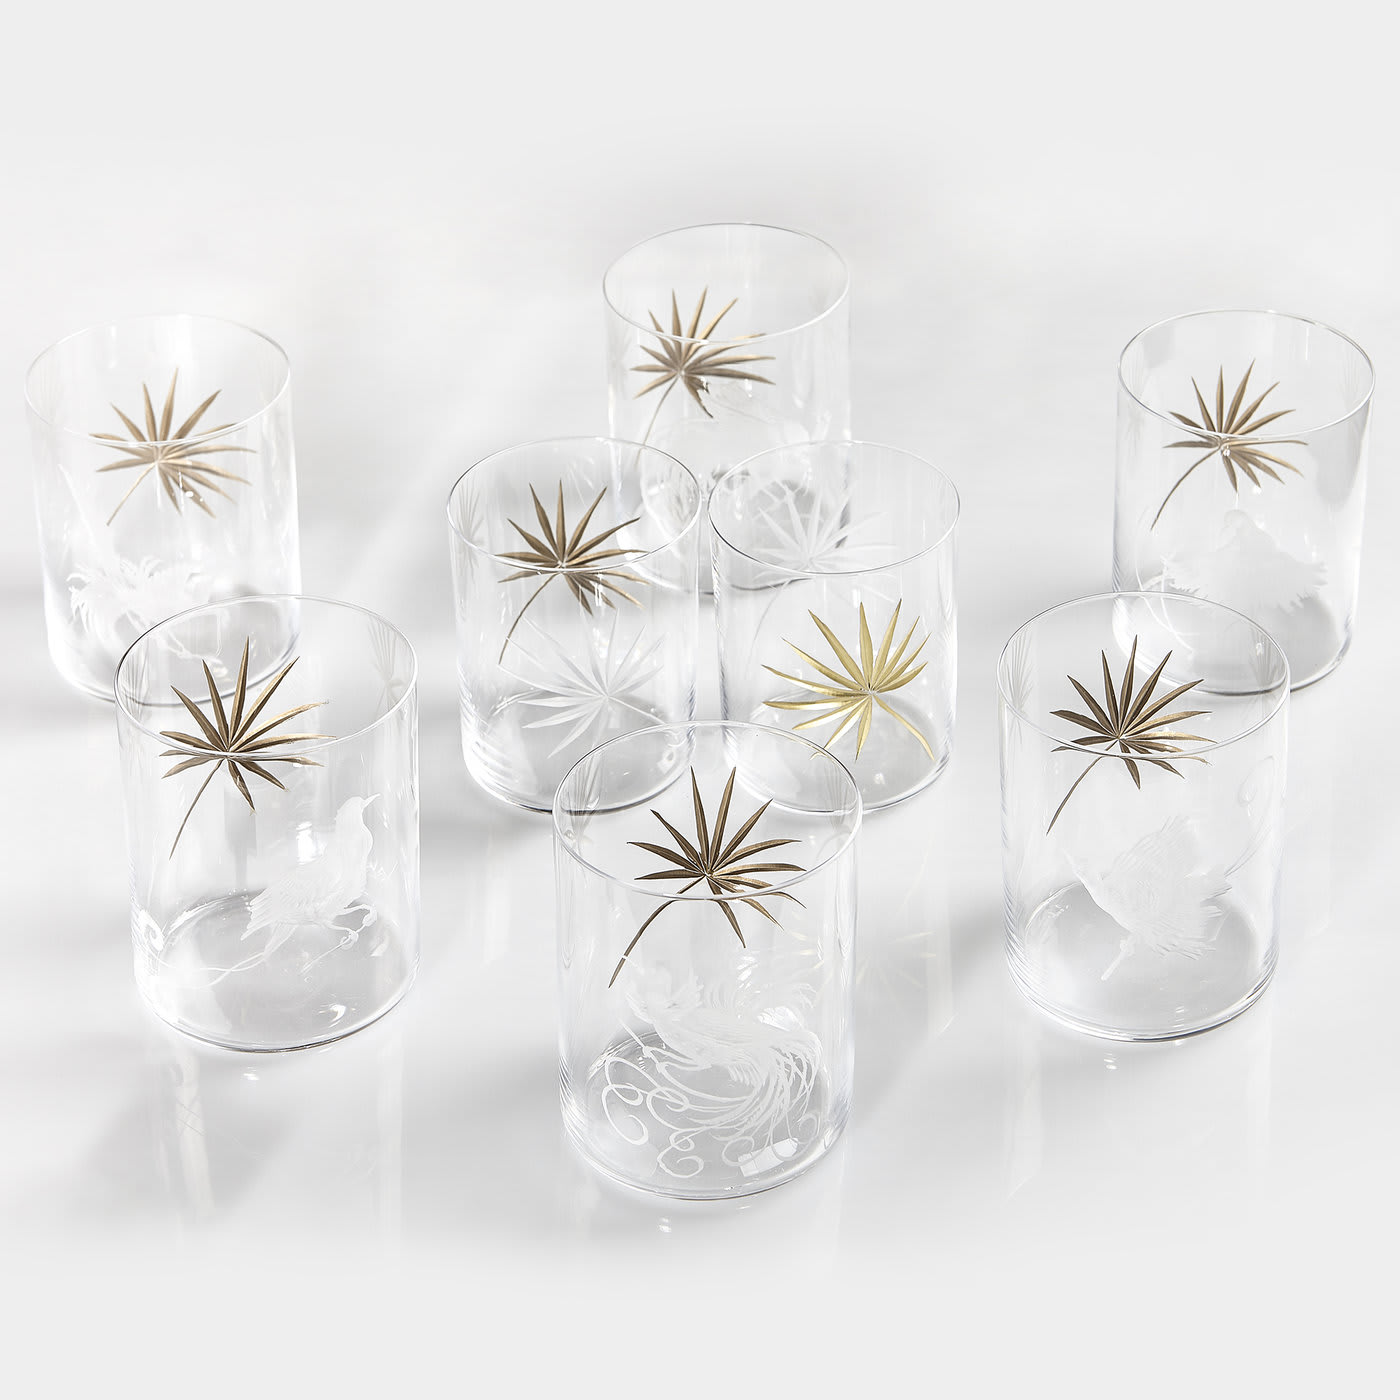 Birds of Paradise Crystal Glass #5 - Moleria Locchi